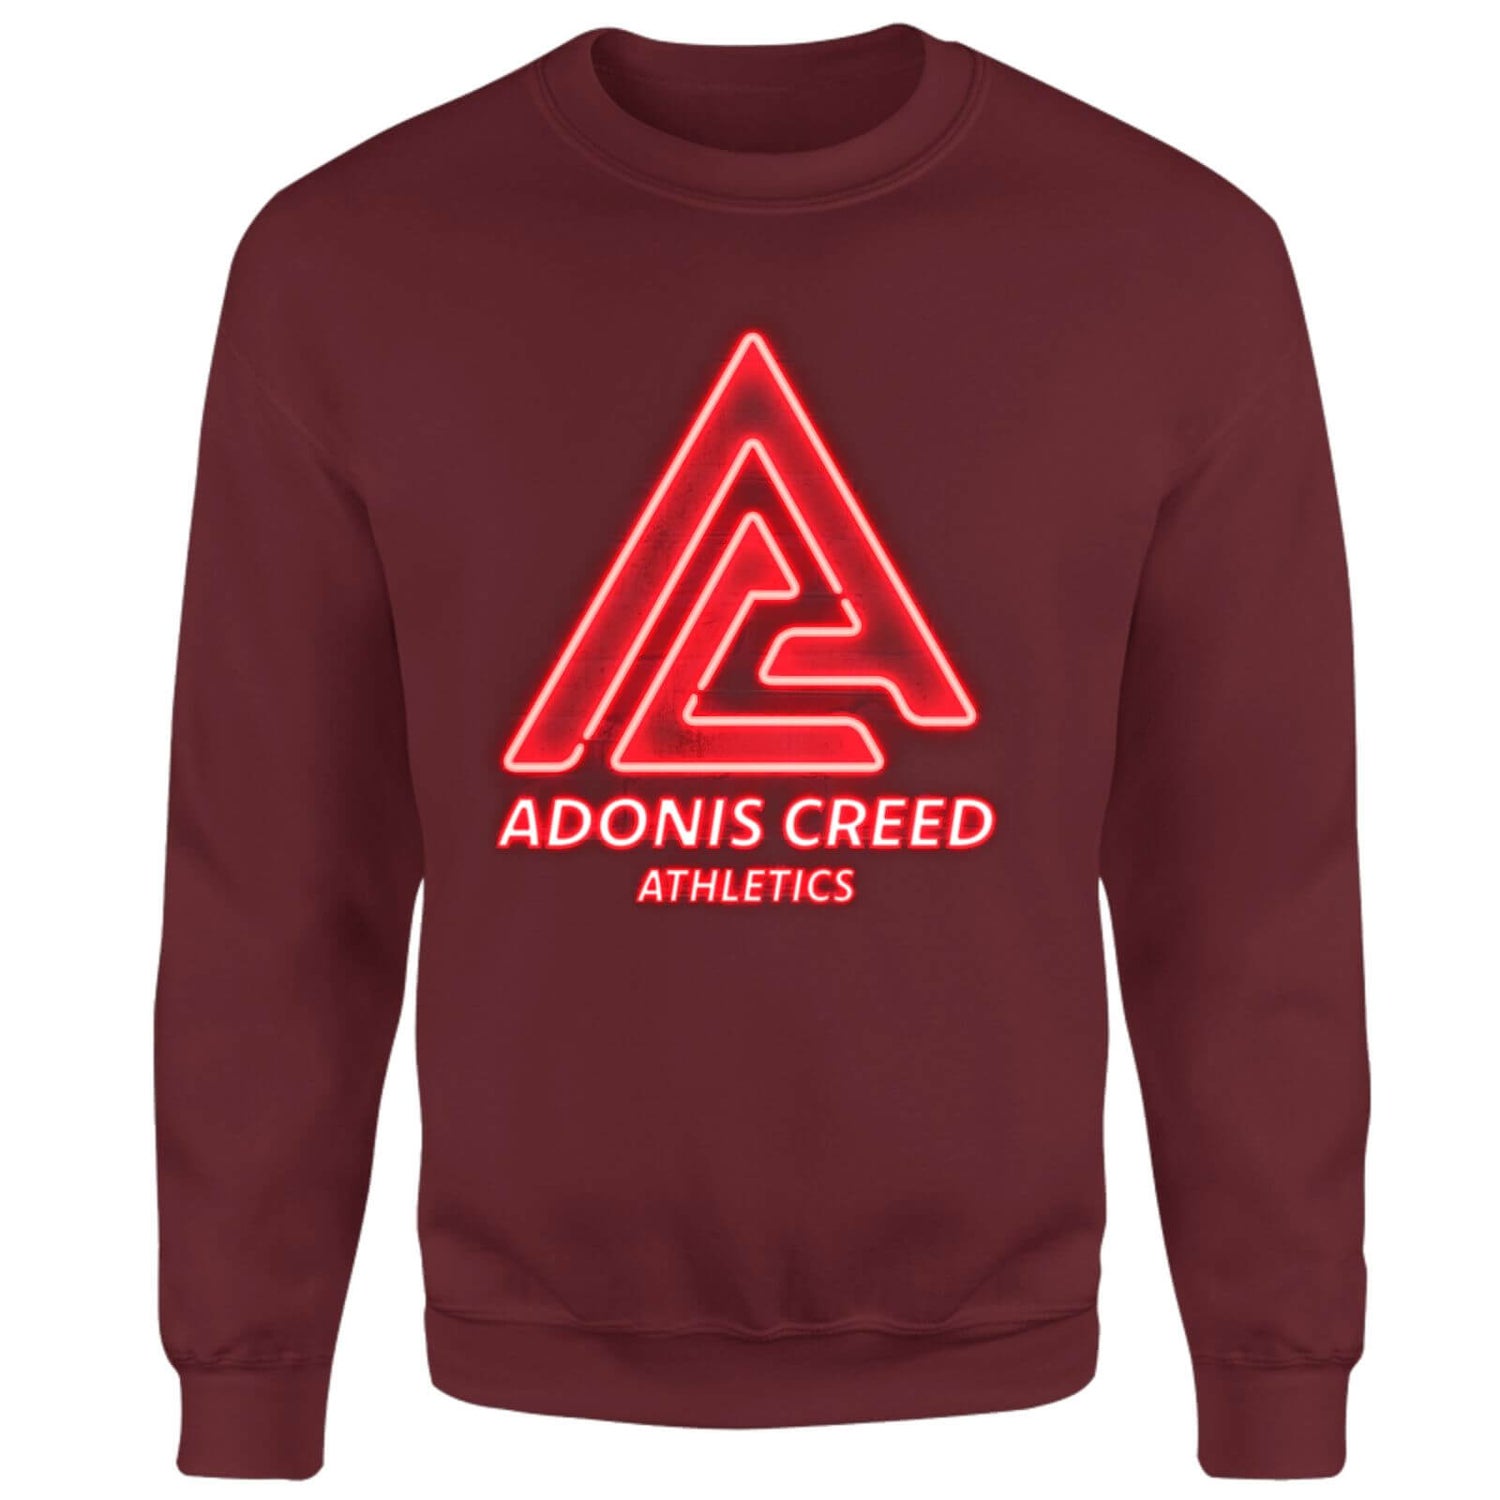 Creed Adonis Creed Athletics Neon Sign Sweatshirt - Burgundy